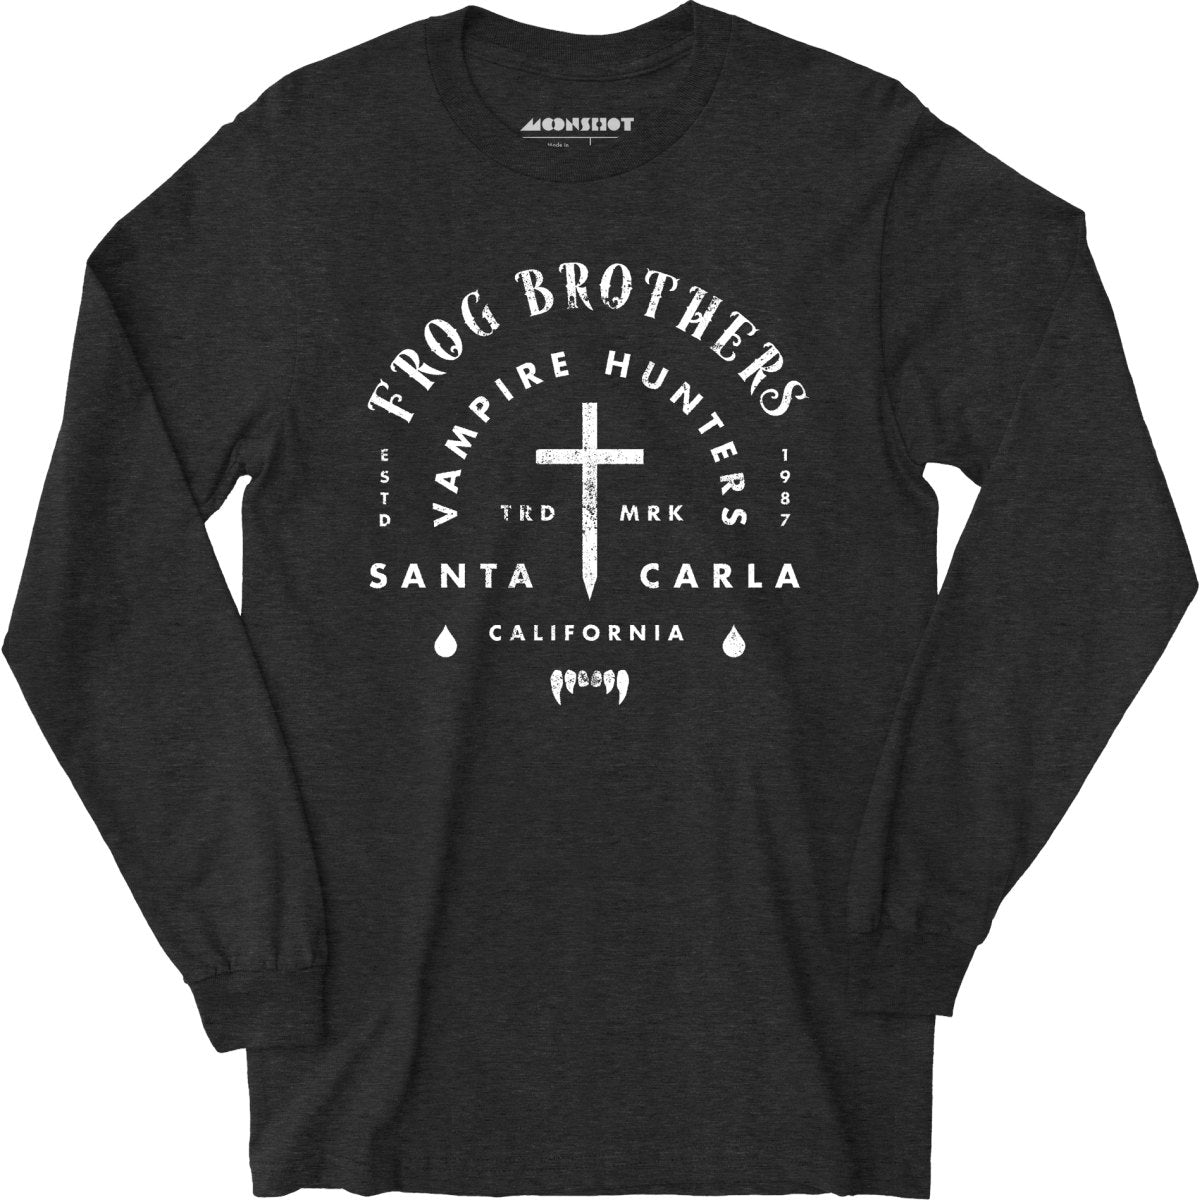 Frog Brothers Vampire Hunters - Long Sleeve T-Shirt